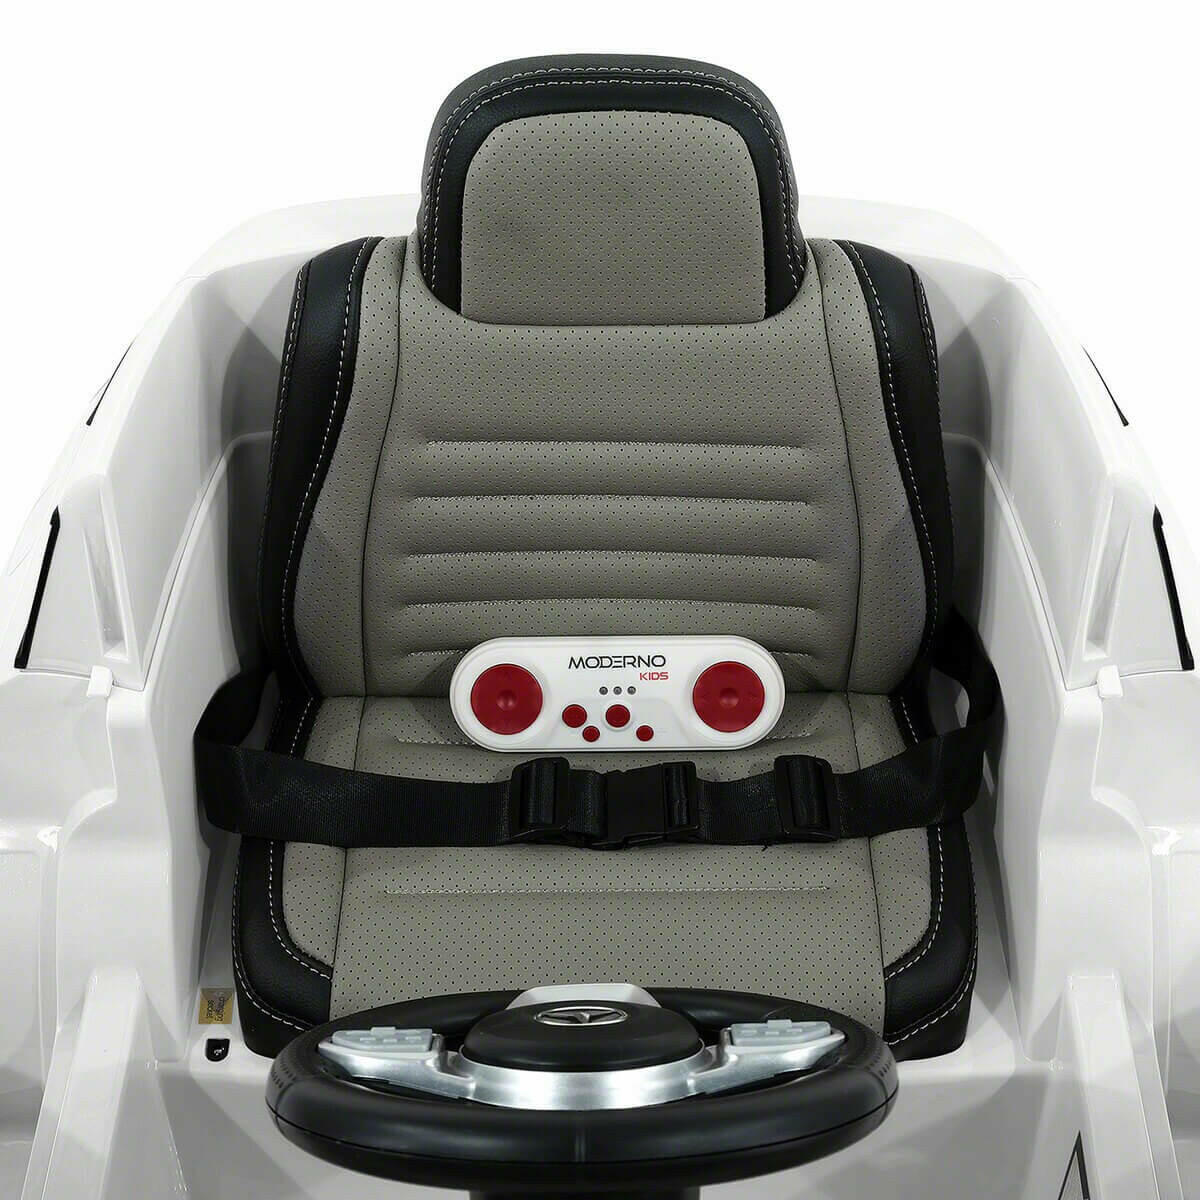 Mercedes Kids 12V GLE450 Ride-On Car Parental Remote, MP3, Leather Seats, LED Lights - Kids Eye Candy